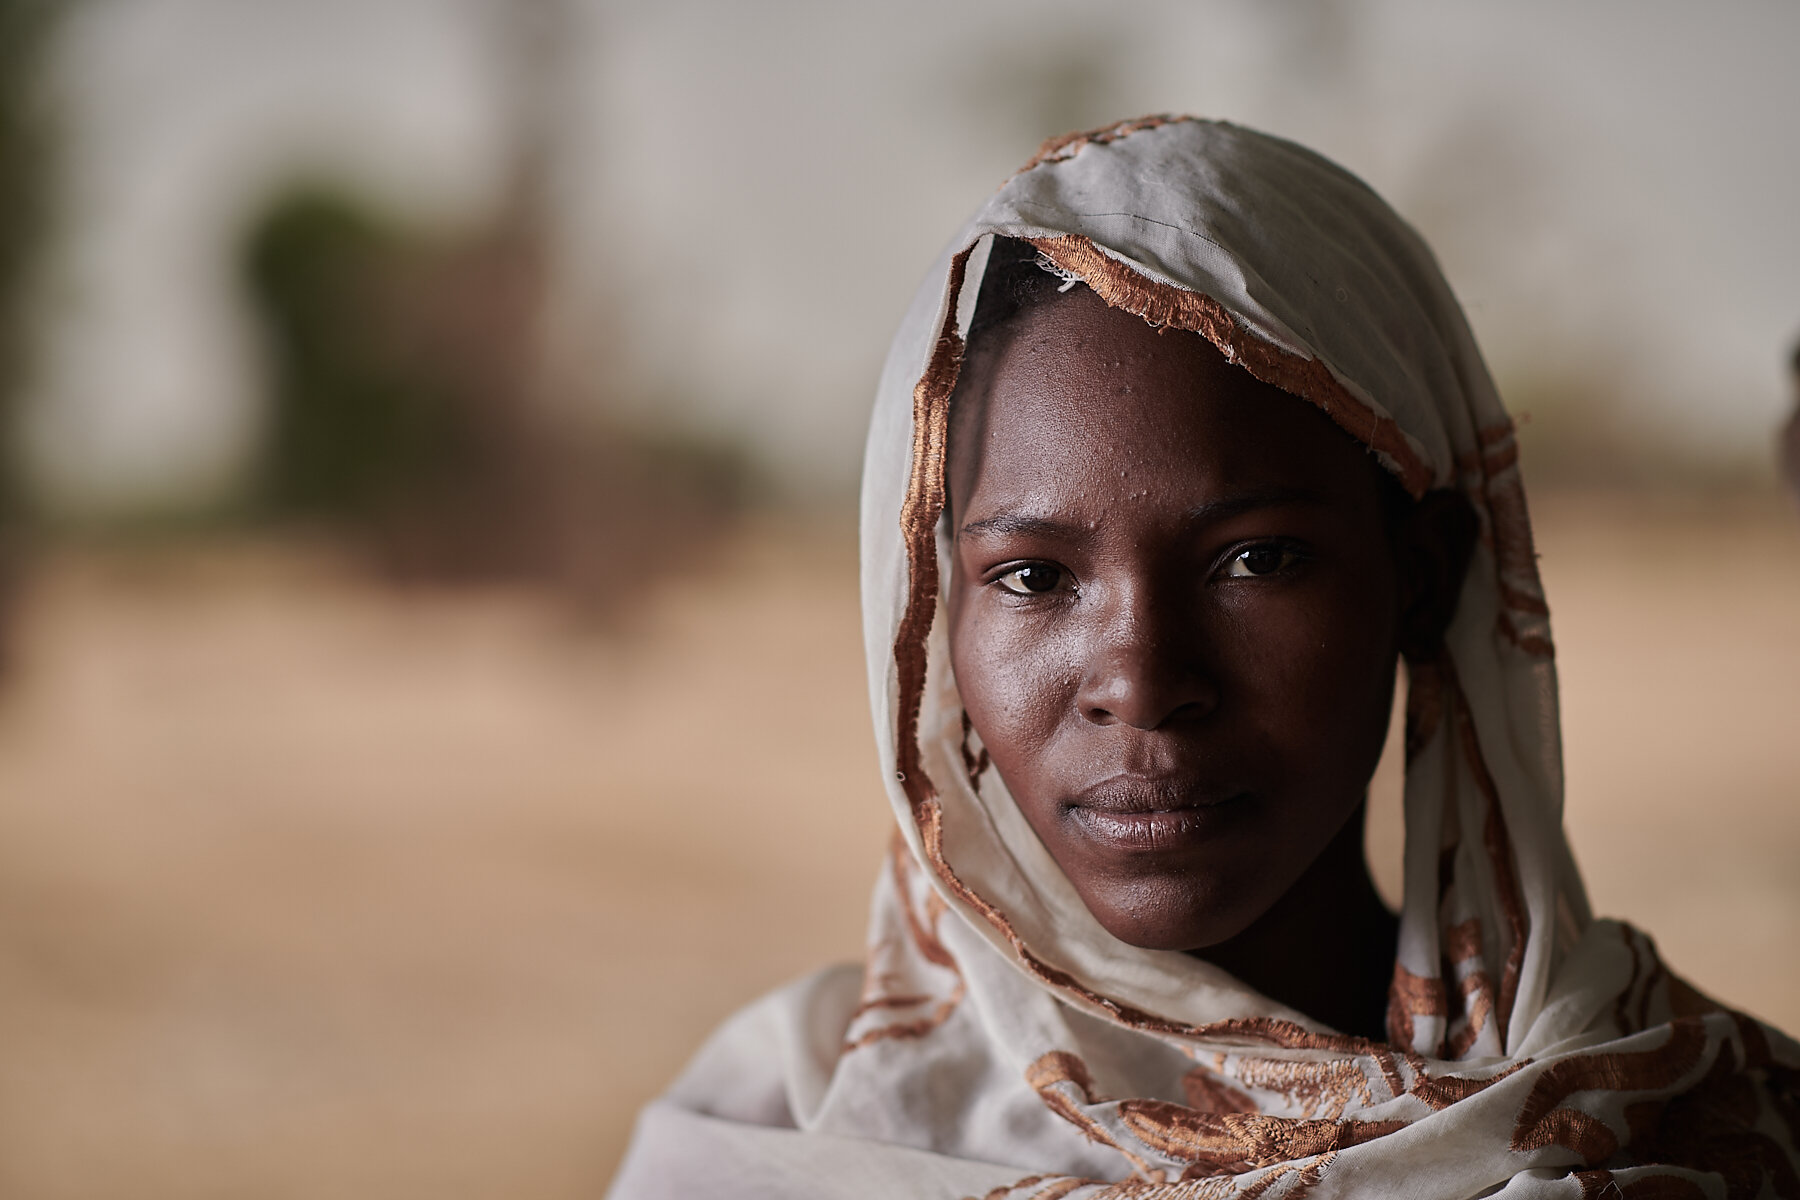 Young Malian woman, village near Segou